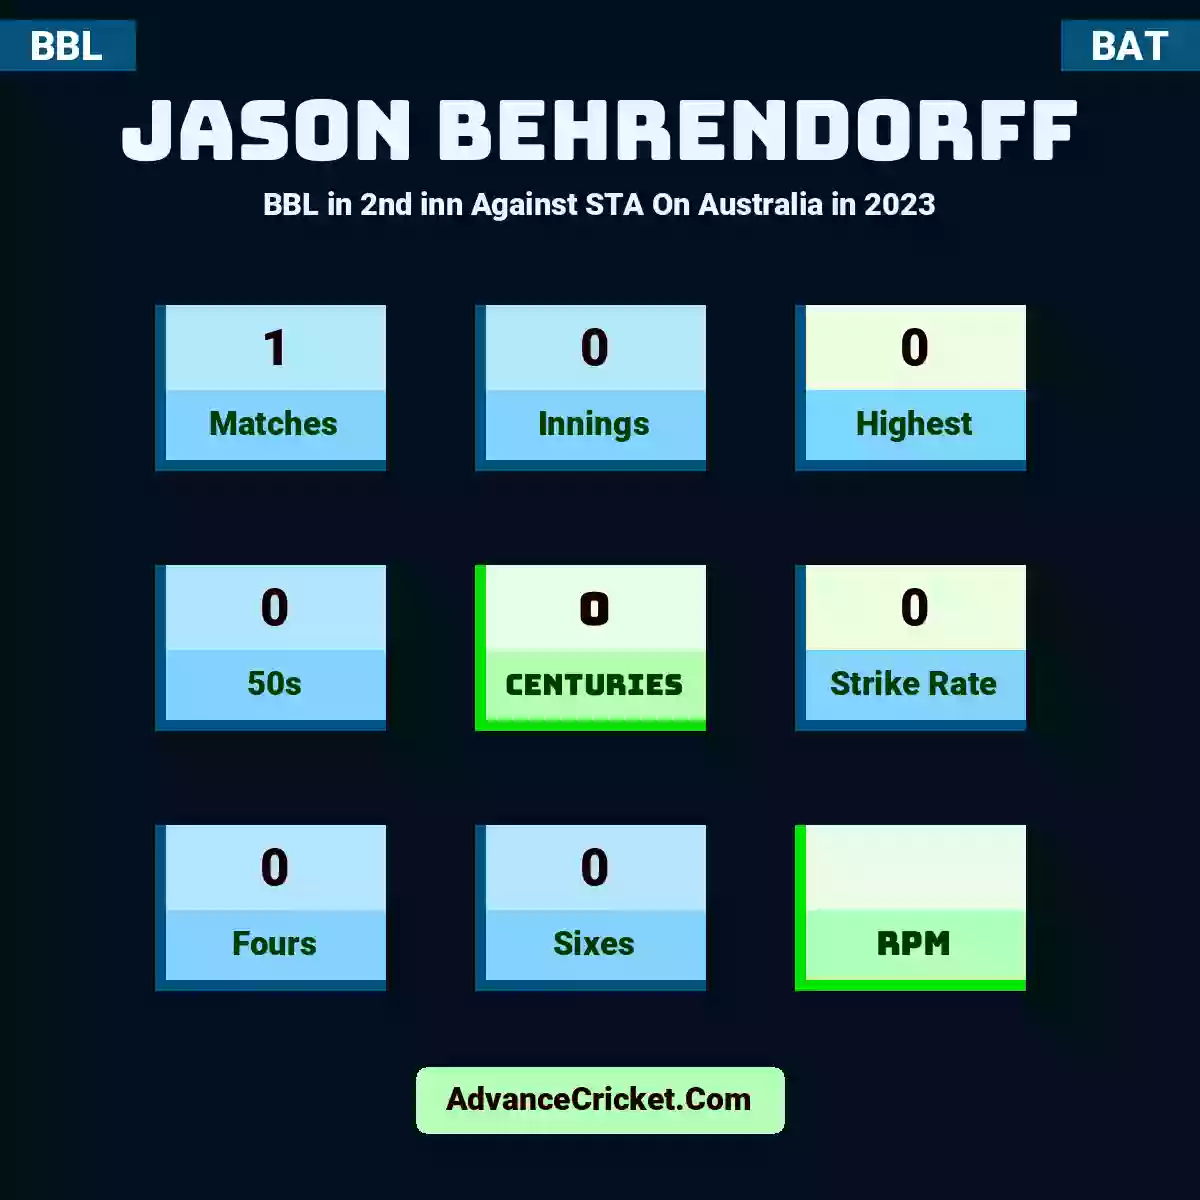 Jason Behrendorff BBL  in 2nd inn Against STA On Australia in 2023, Jason Behrendorff played 1 matches, scored 0 runs as highest, 0 half-centuries, and 0 centuries, with a strike rate of 0. J.Behrendorff hit 0 fours and 0 sixes.